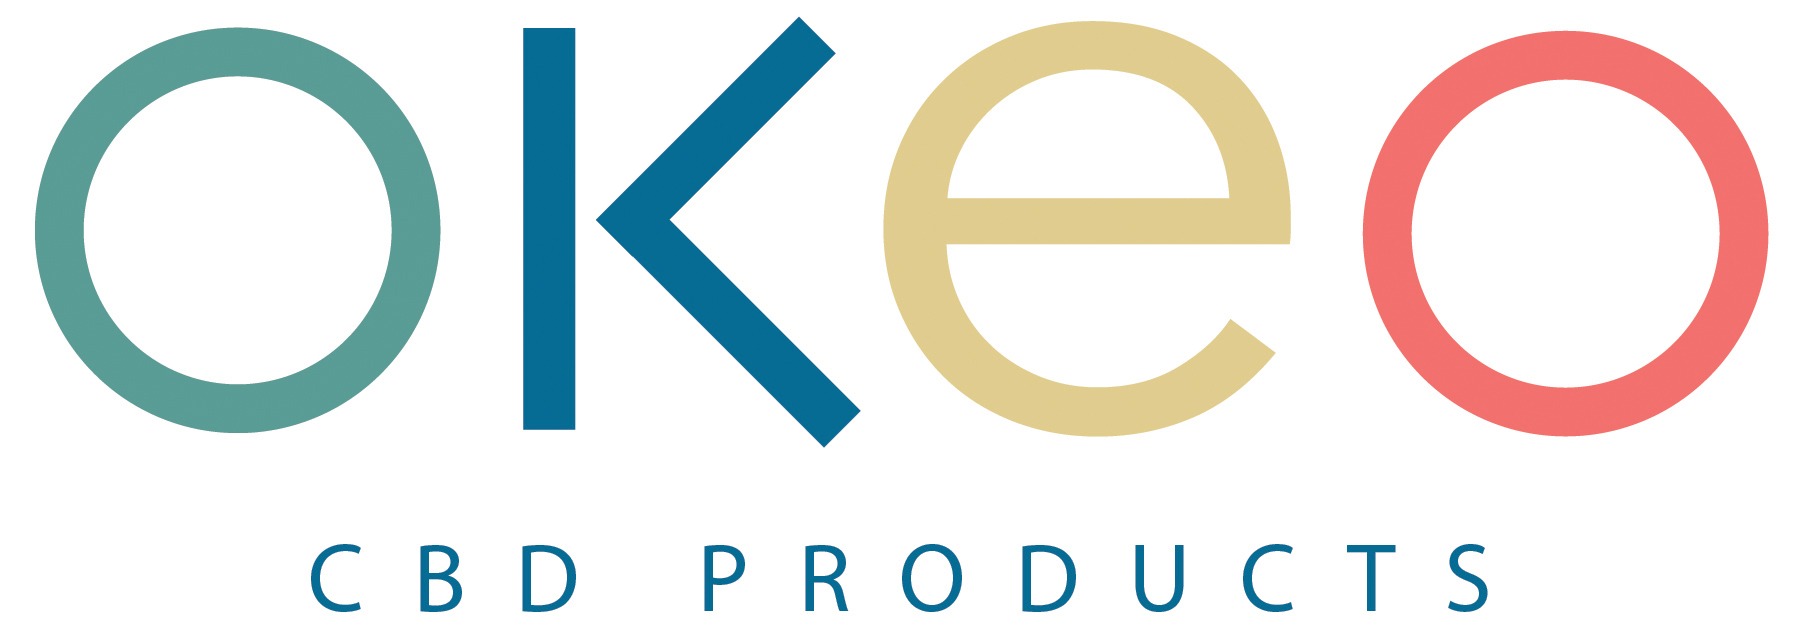 Okeo logo